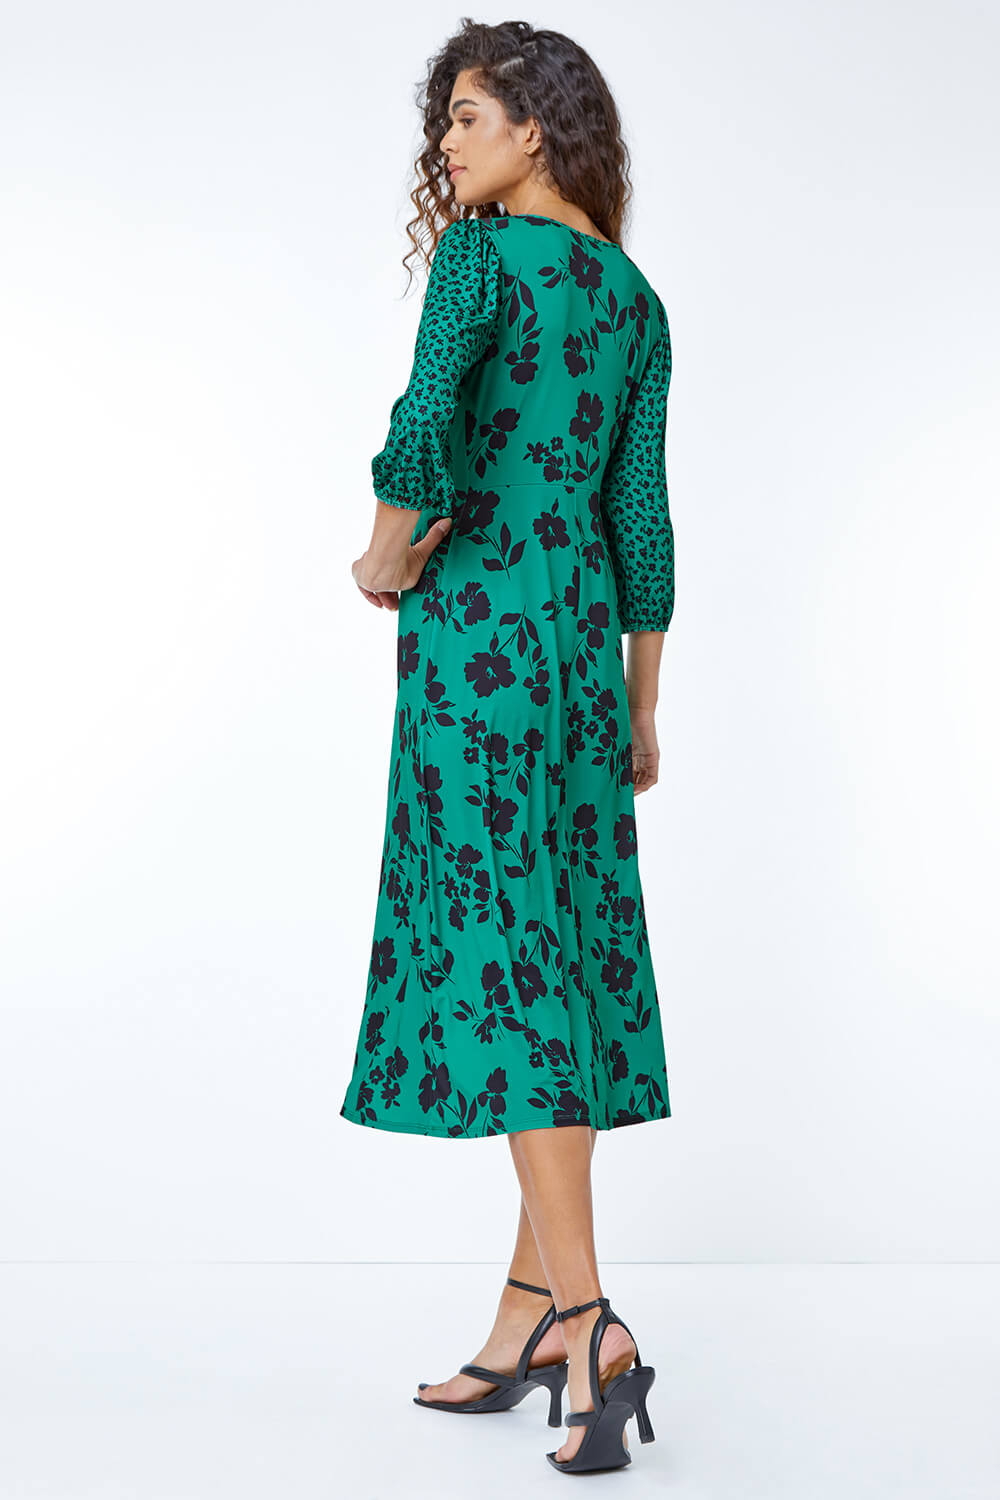 Floral Contrast Print Midi Dress in Green - Roman Originals UK